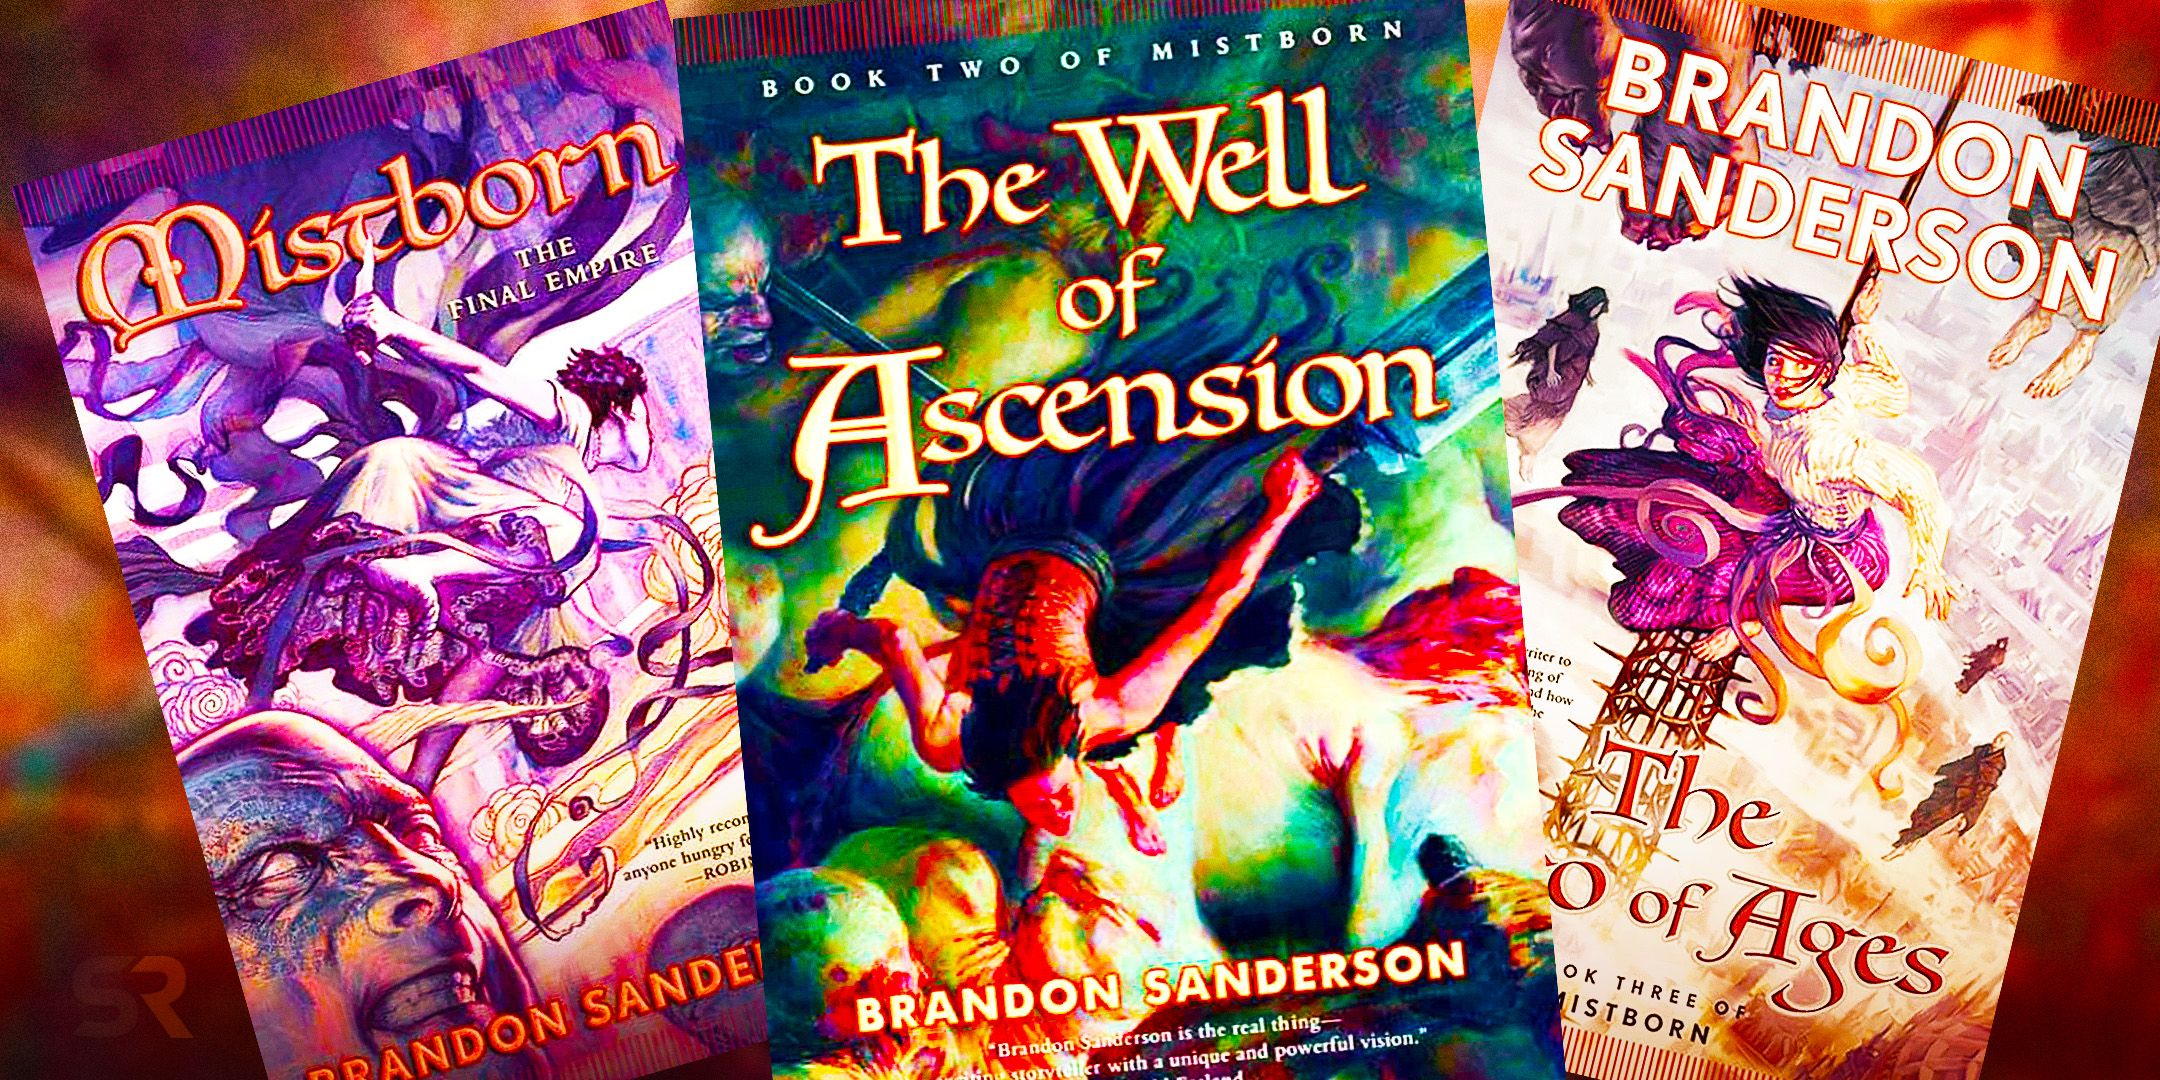 As capas da trilogia Mistborn original: The Final Empire, The Well of Ascension e The Hero of Ages